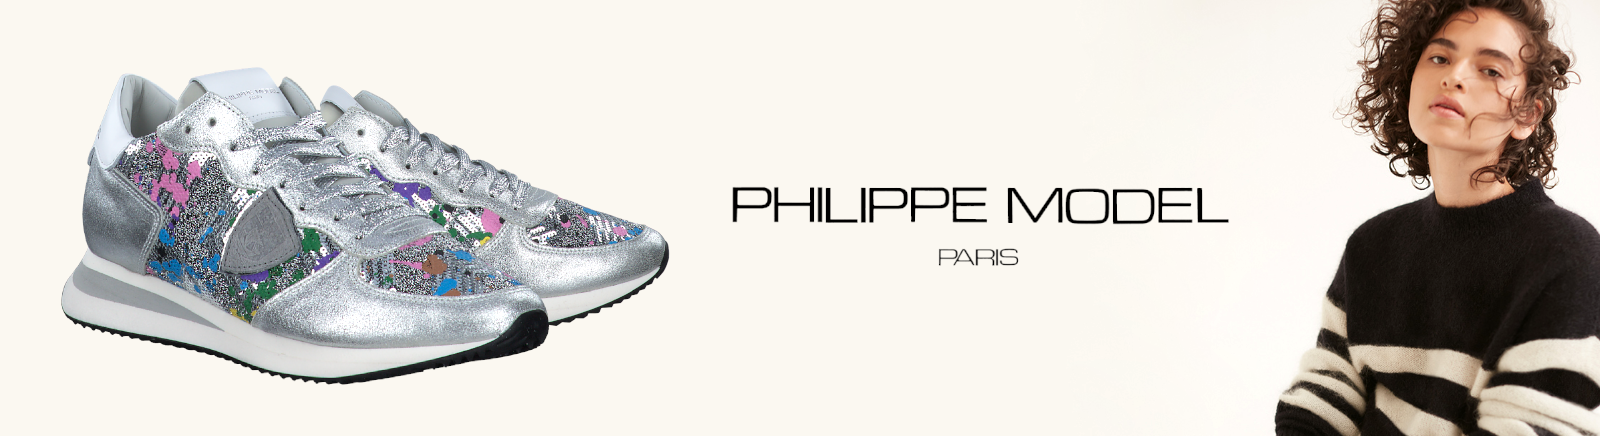 PHILIPPE MODEL Kinderschuhe online kaufen im GISY Schuhe Shop